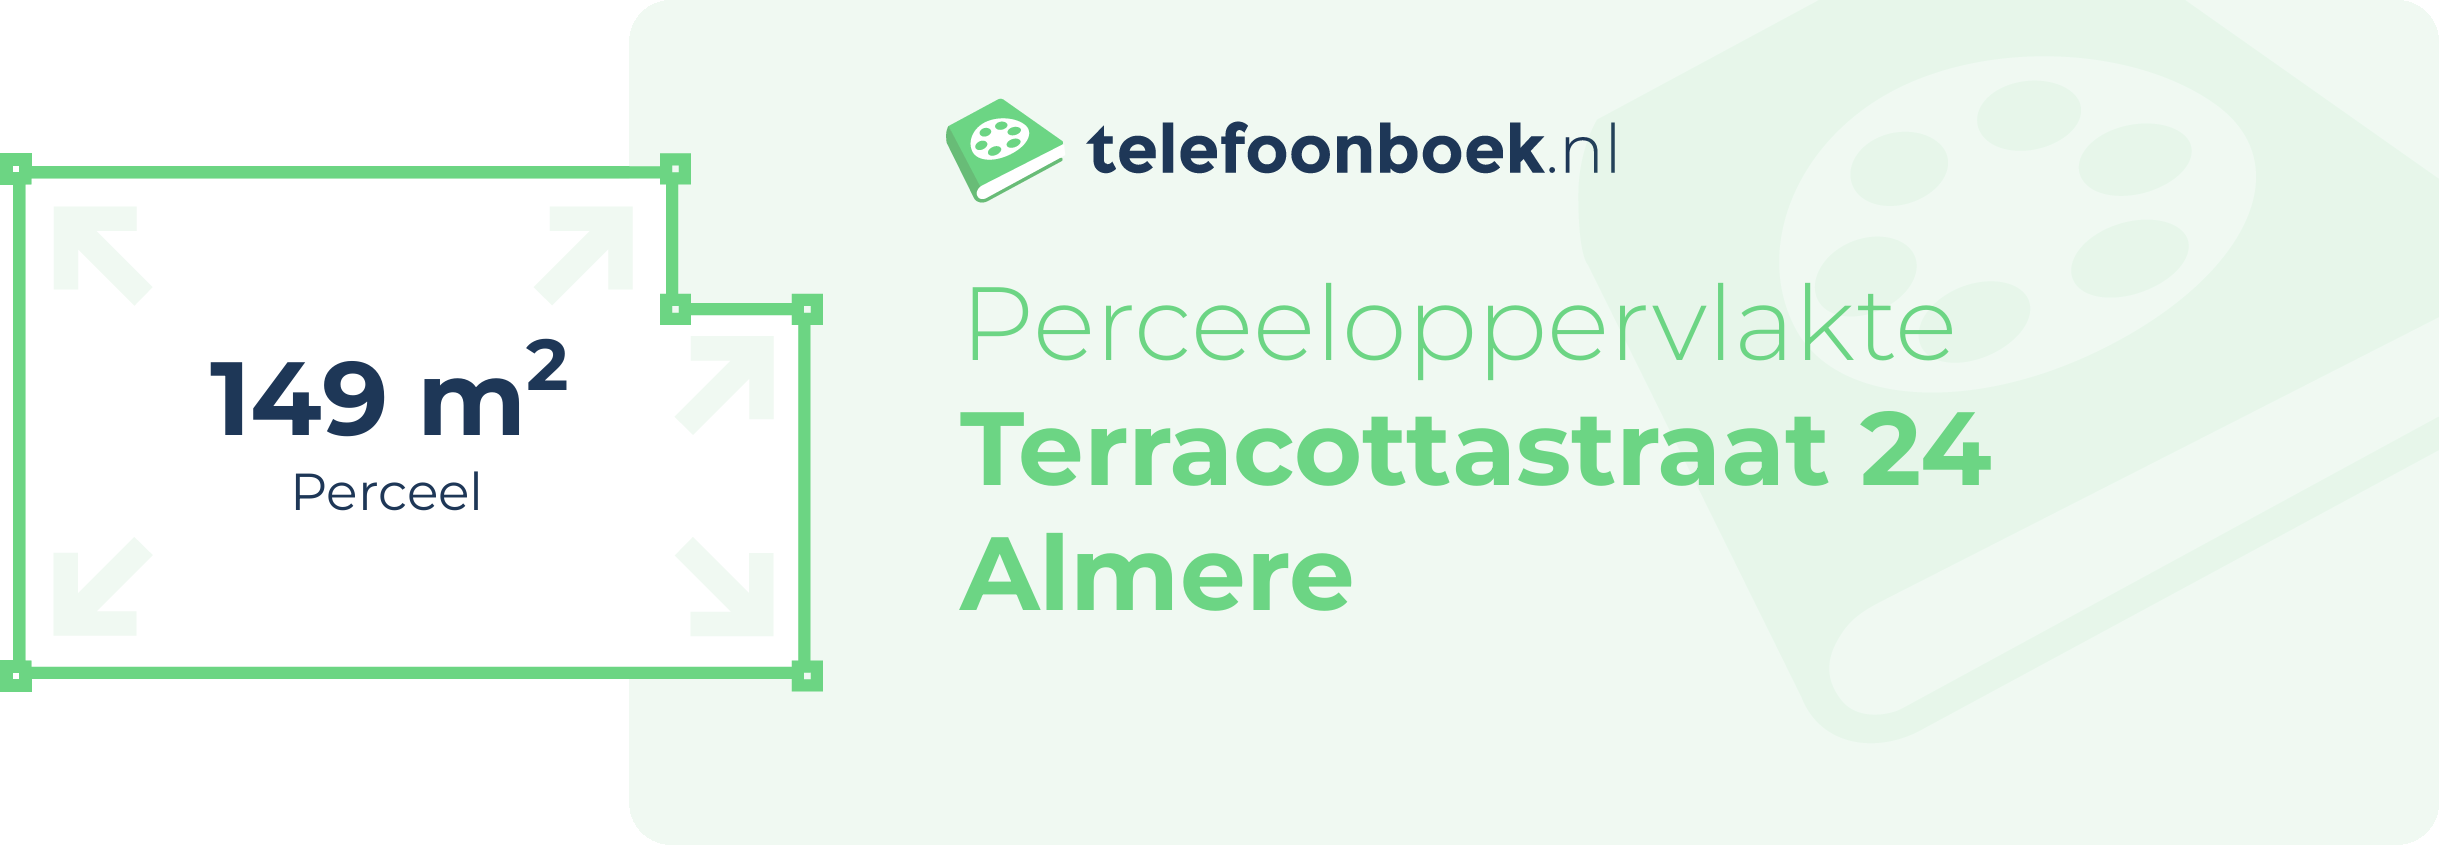 Perceeloppervlakte Terracottastraat 24 Almere